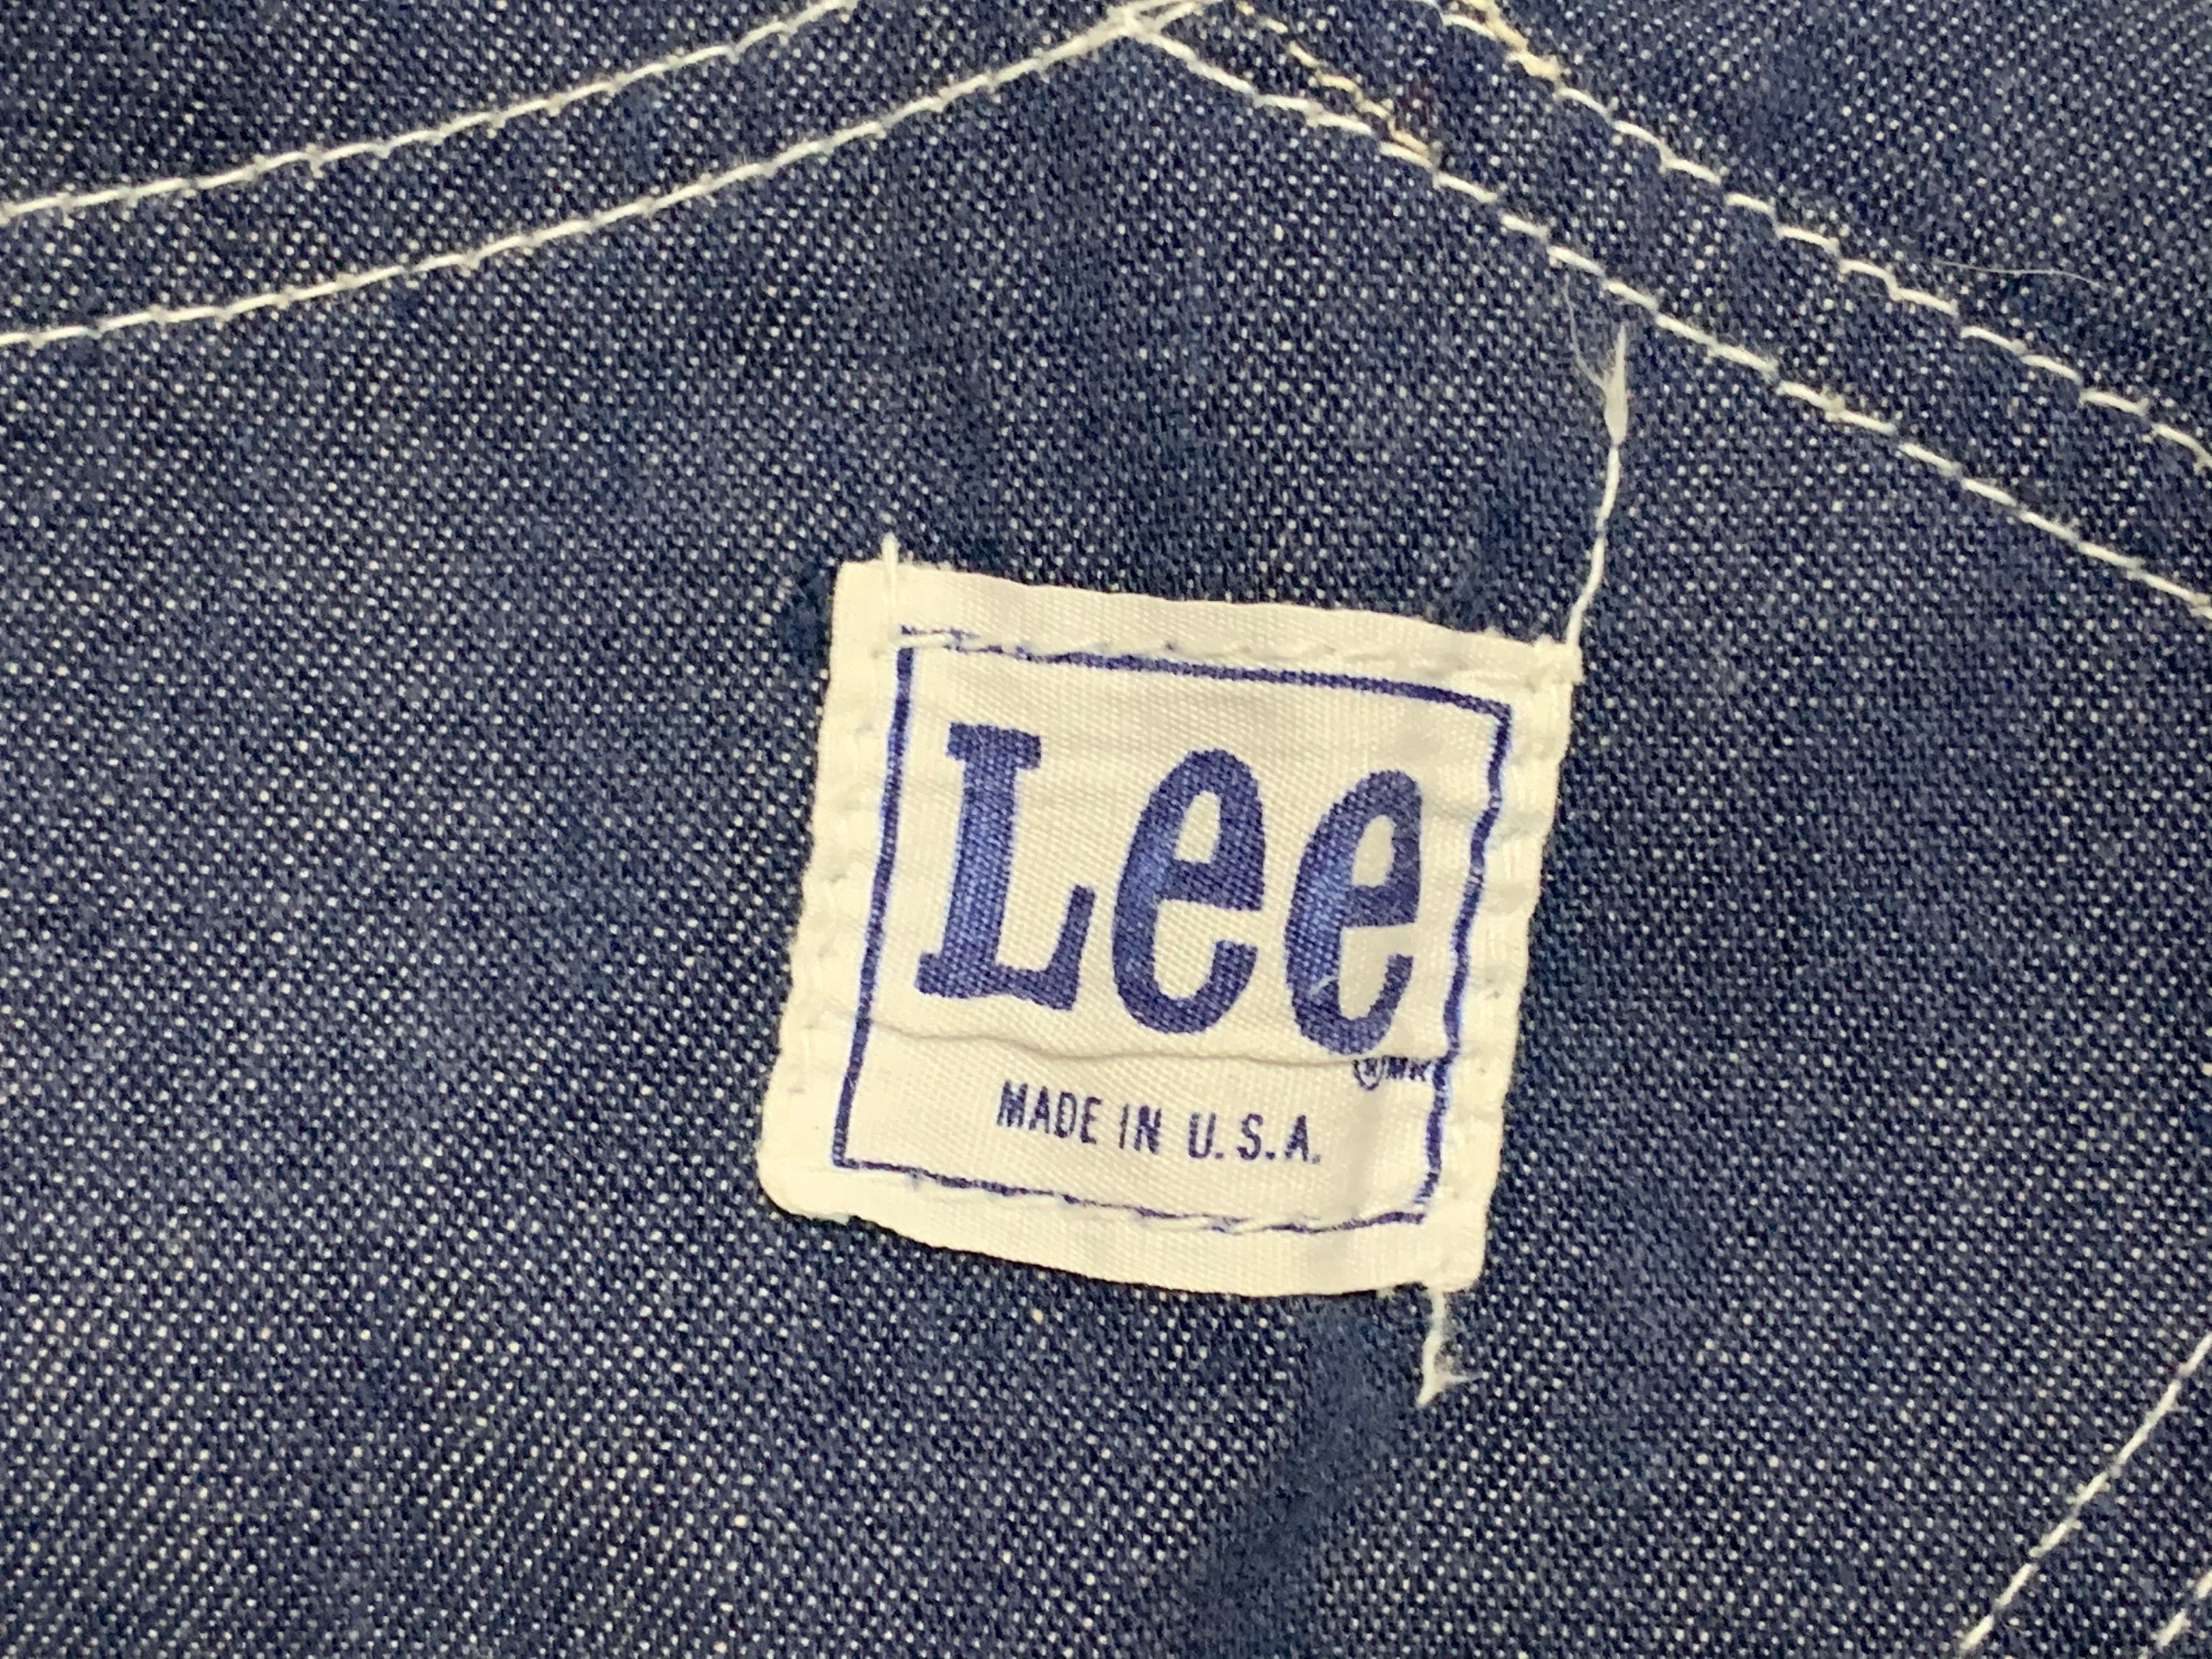 Vintage 1970s LEE Denim Overalls Size S to M Work Wear Union